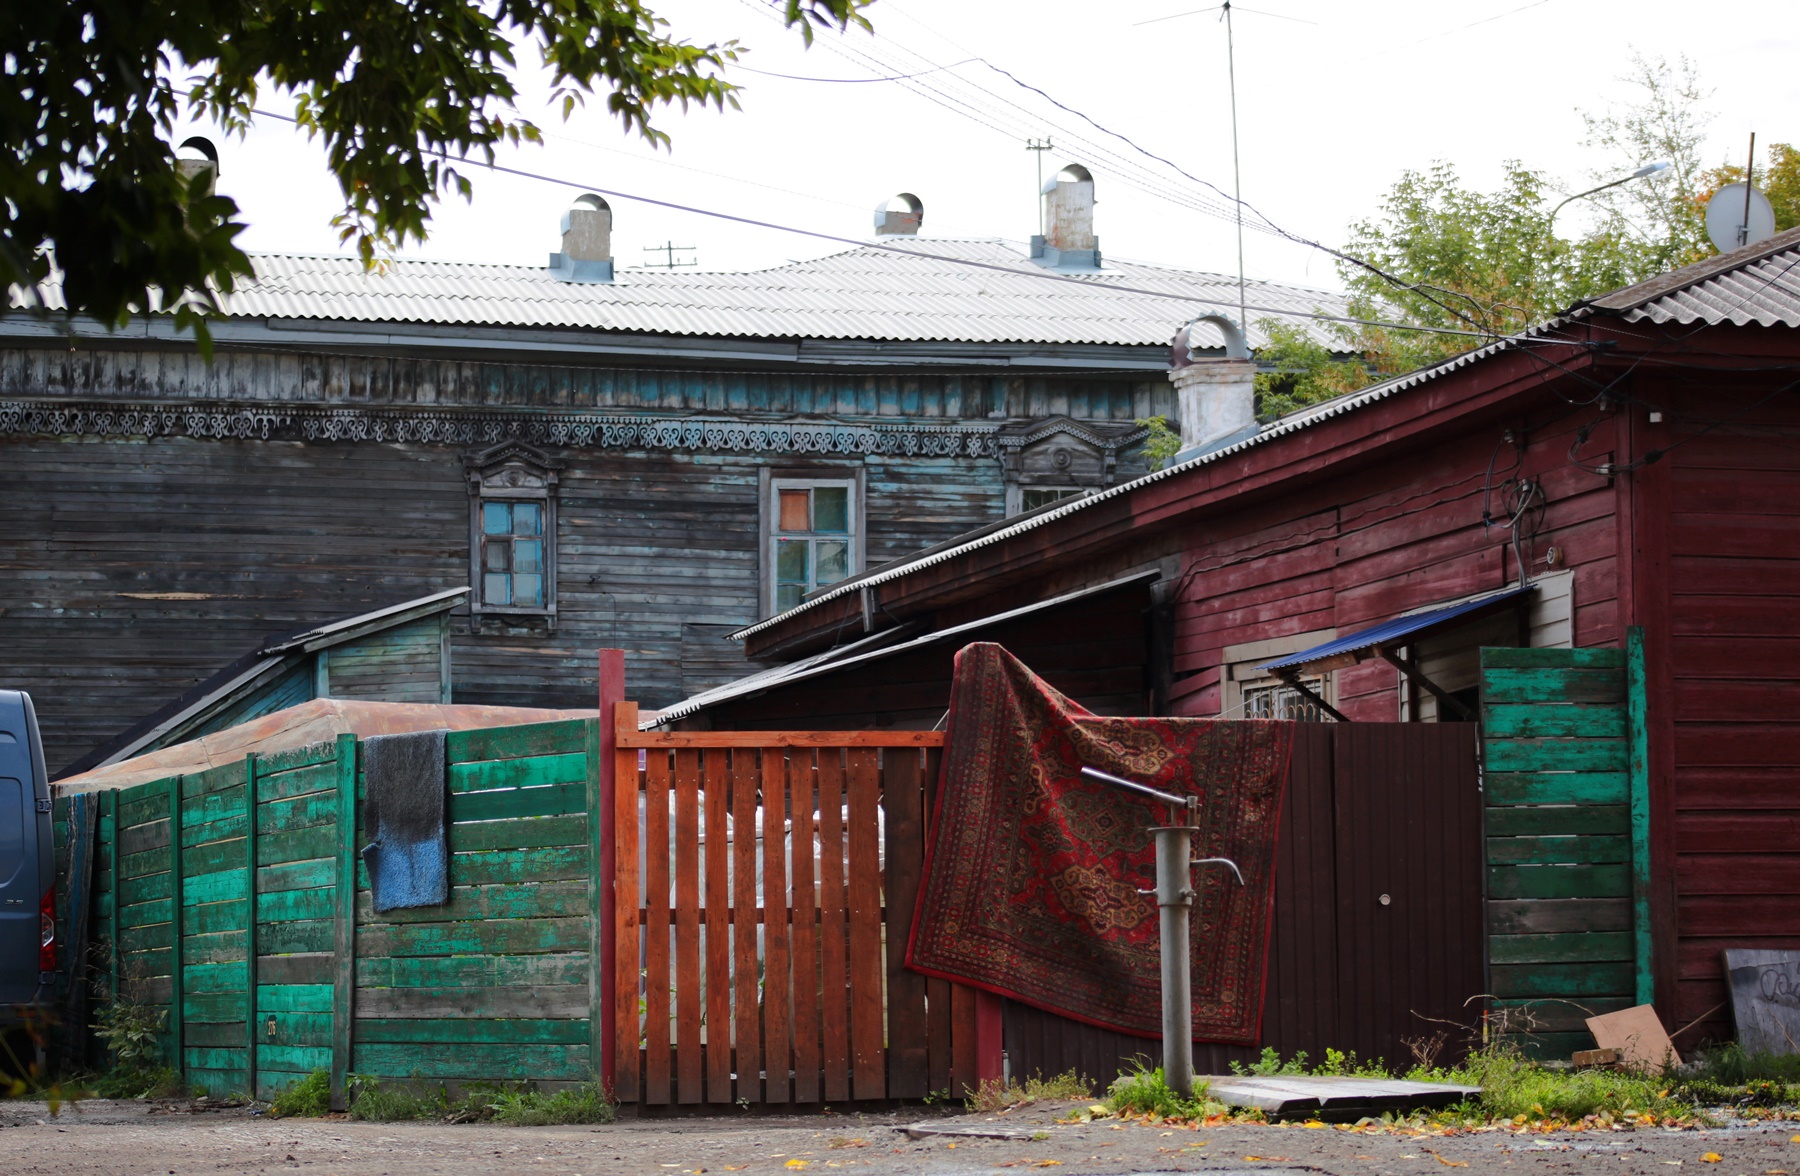 Улица Бабушкина в Иркутске - маленькое село большого города